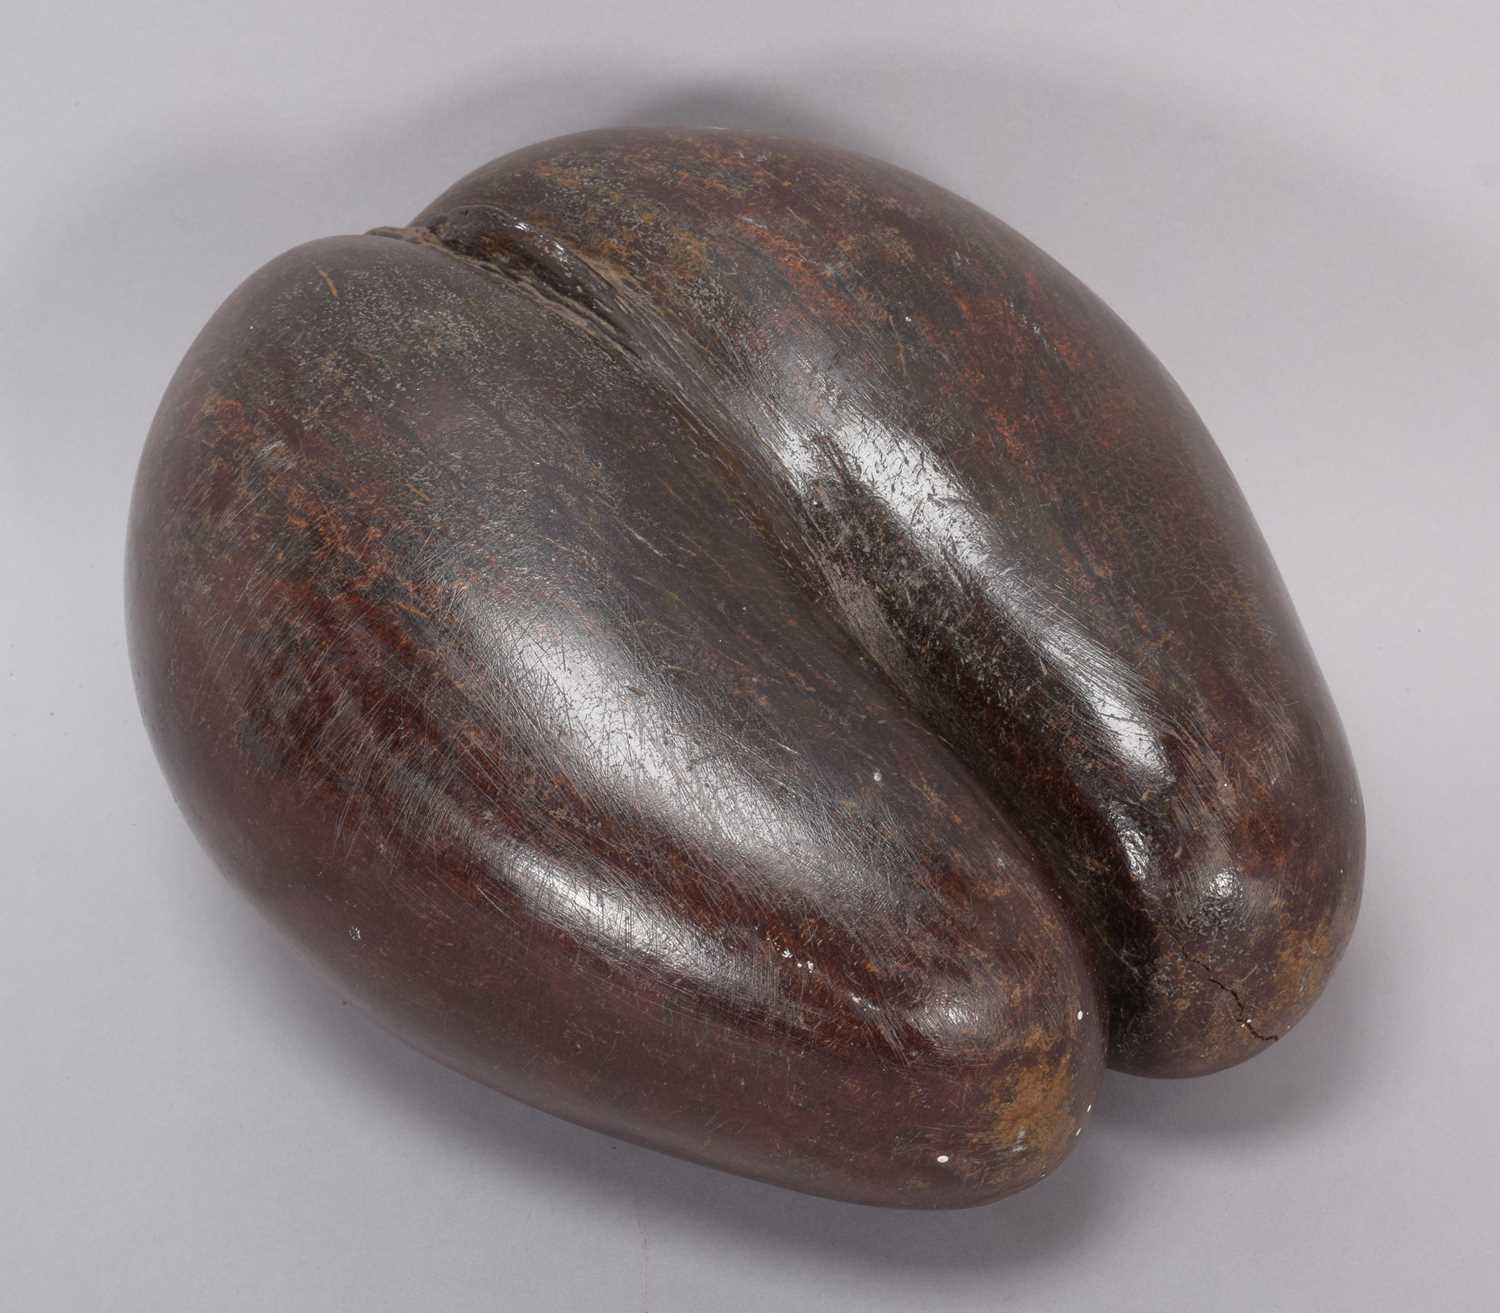 Lot 258 - Natural History: A Coco de Mer Nut (Lodoicea